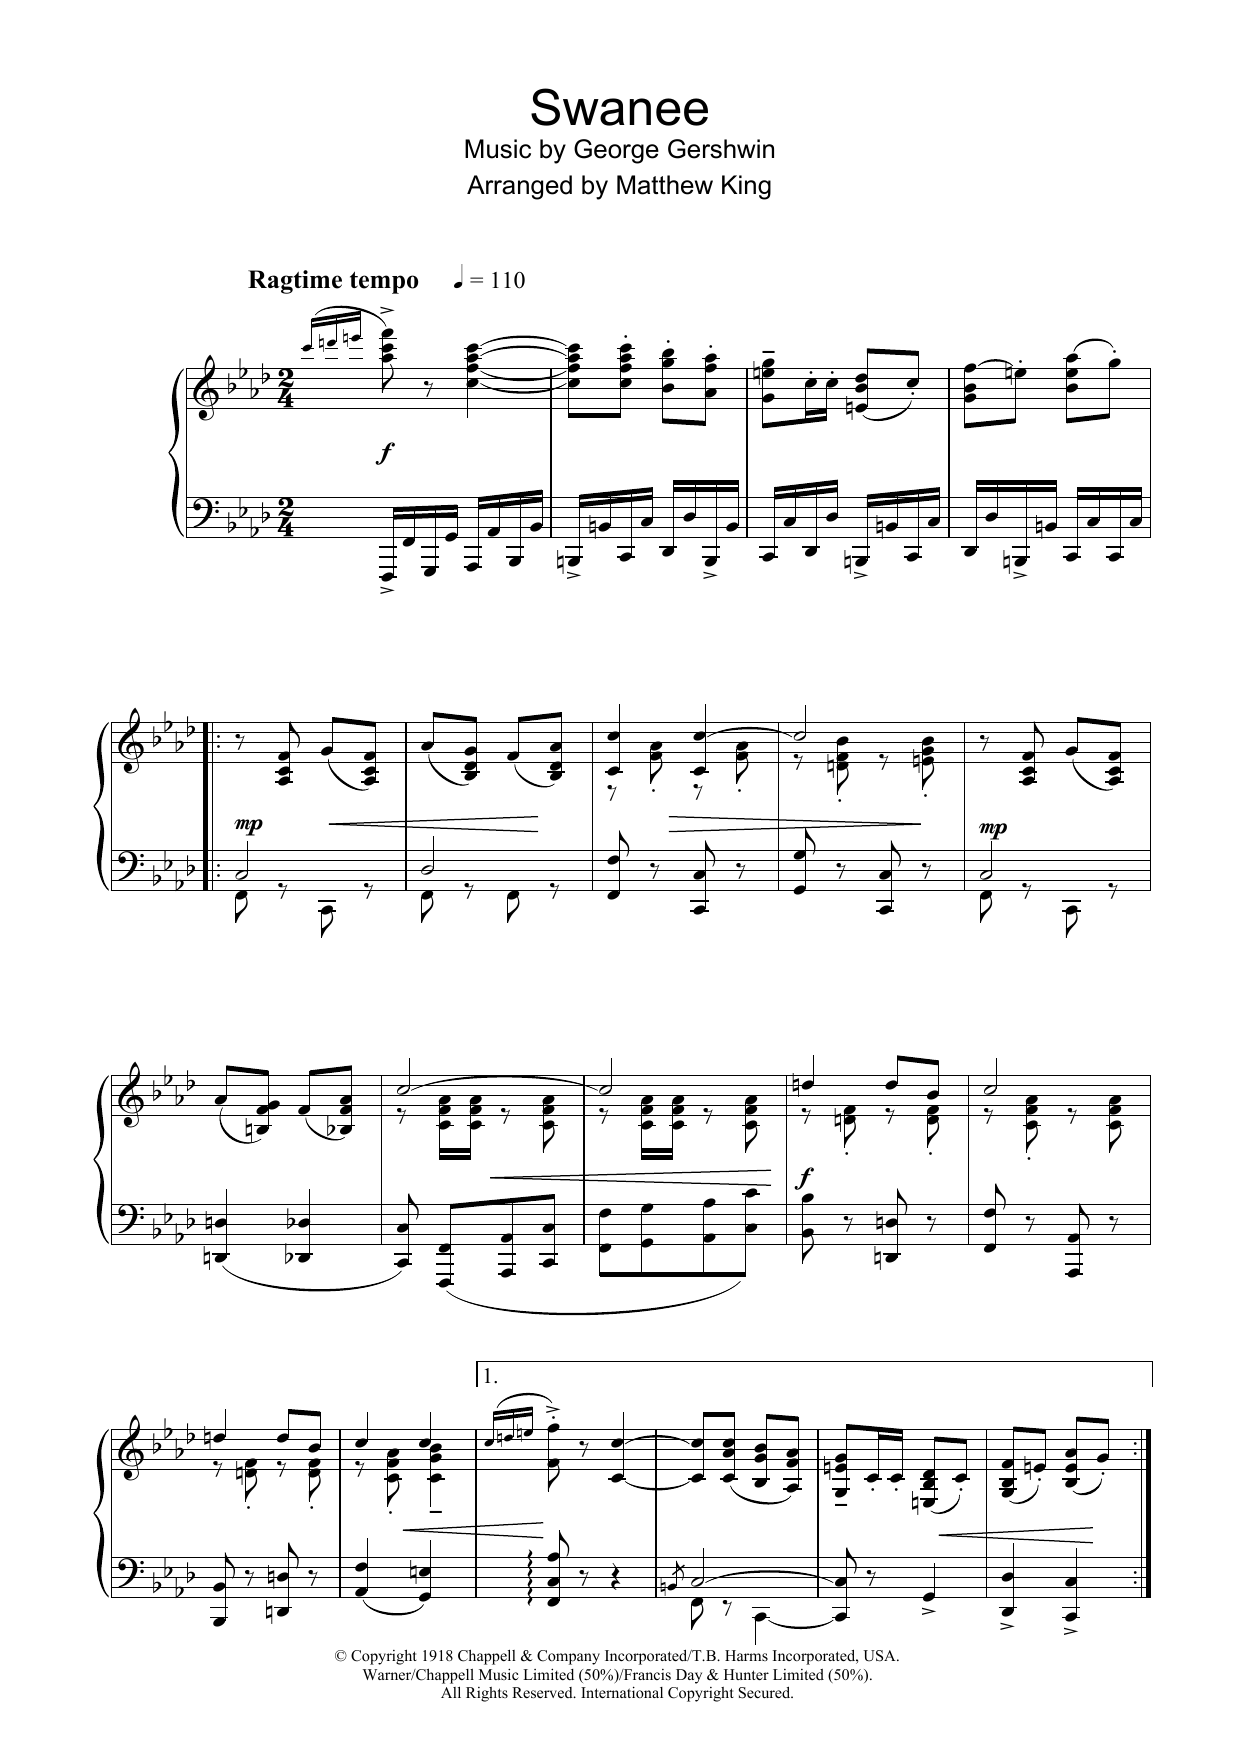 George Gershwin Swanee Sheet Music Notes & Chords for Ukulele - Download or Print PDF